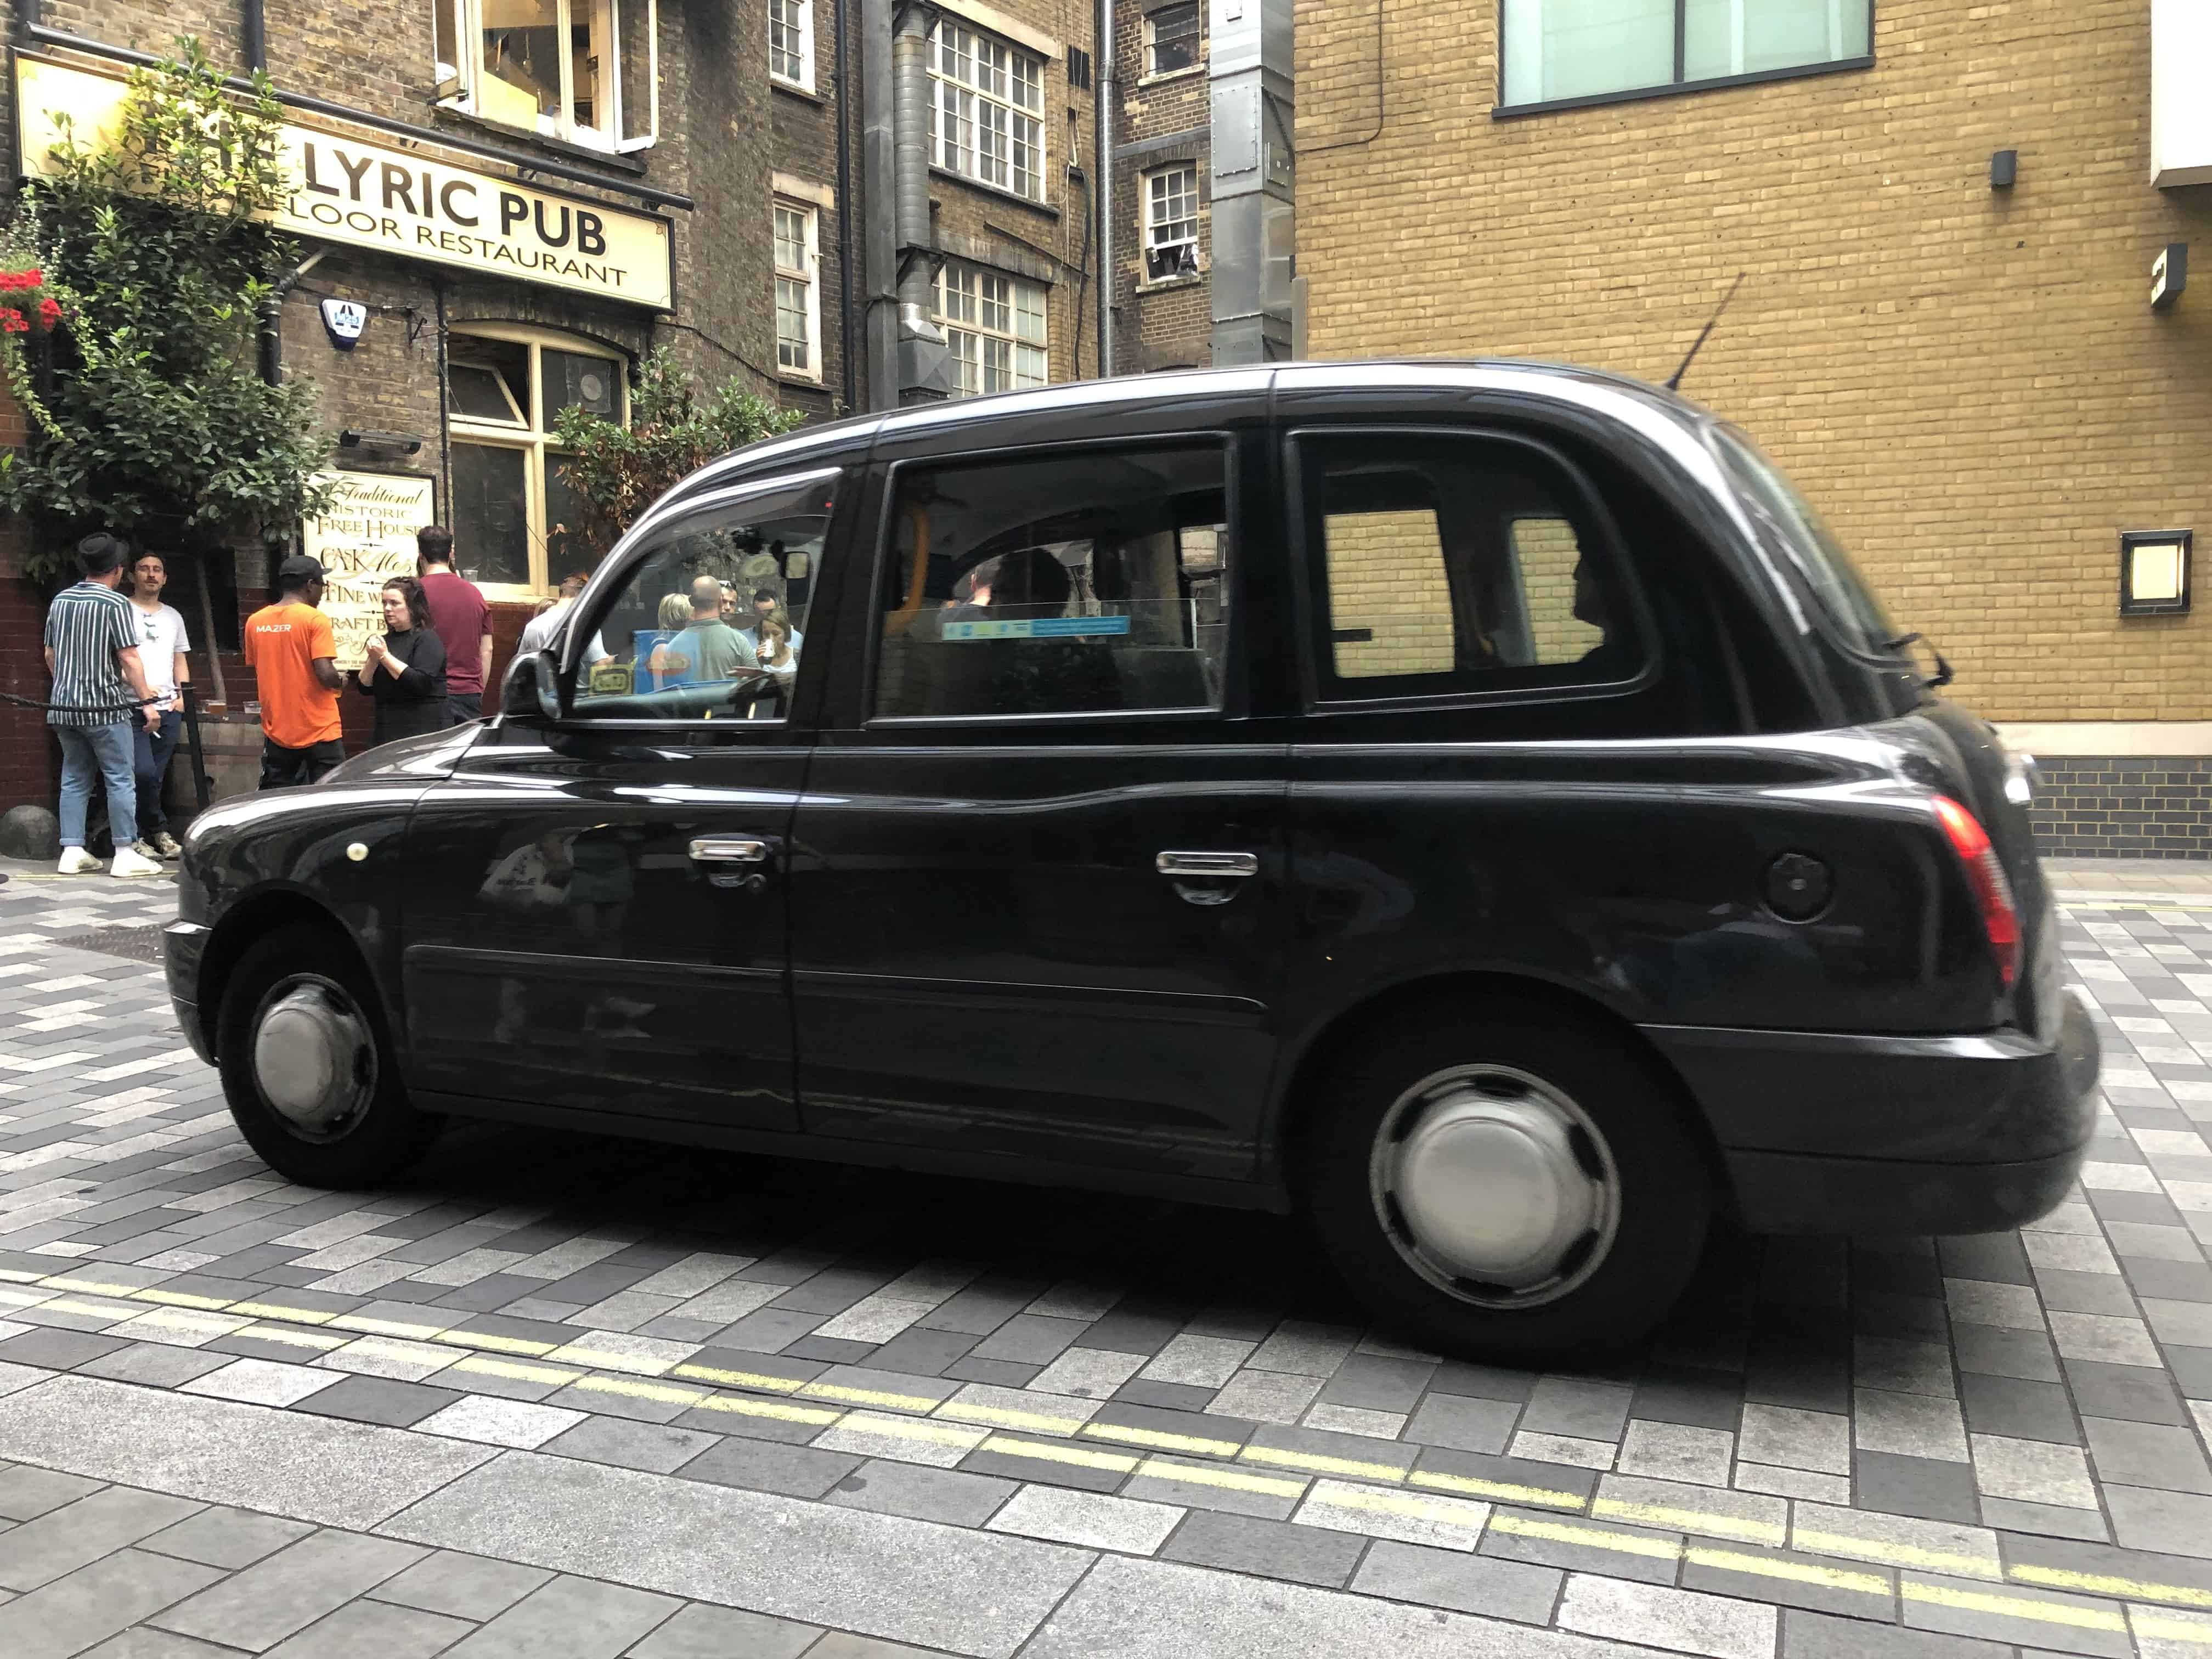 London Black Taxi